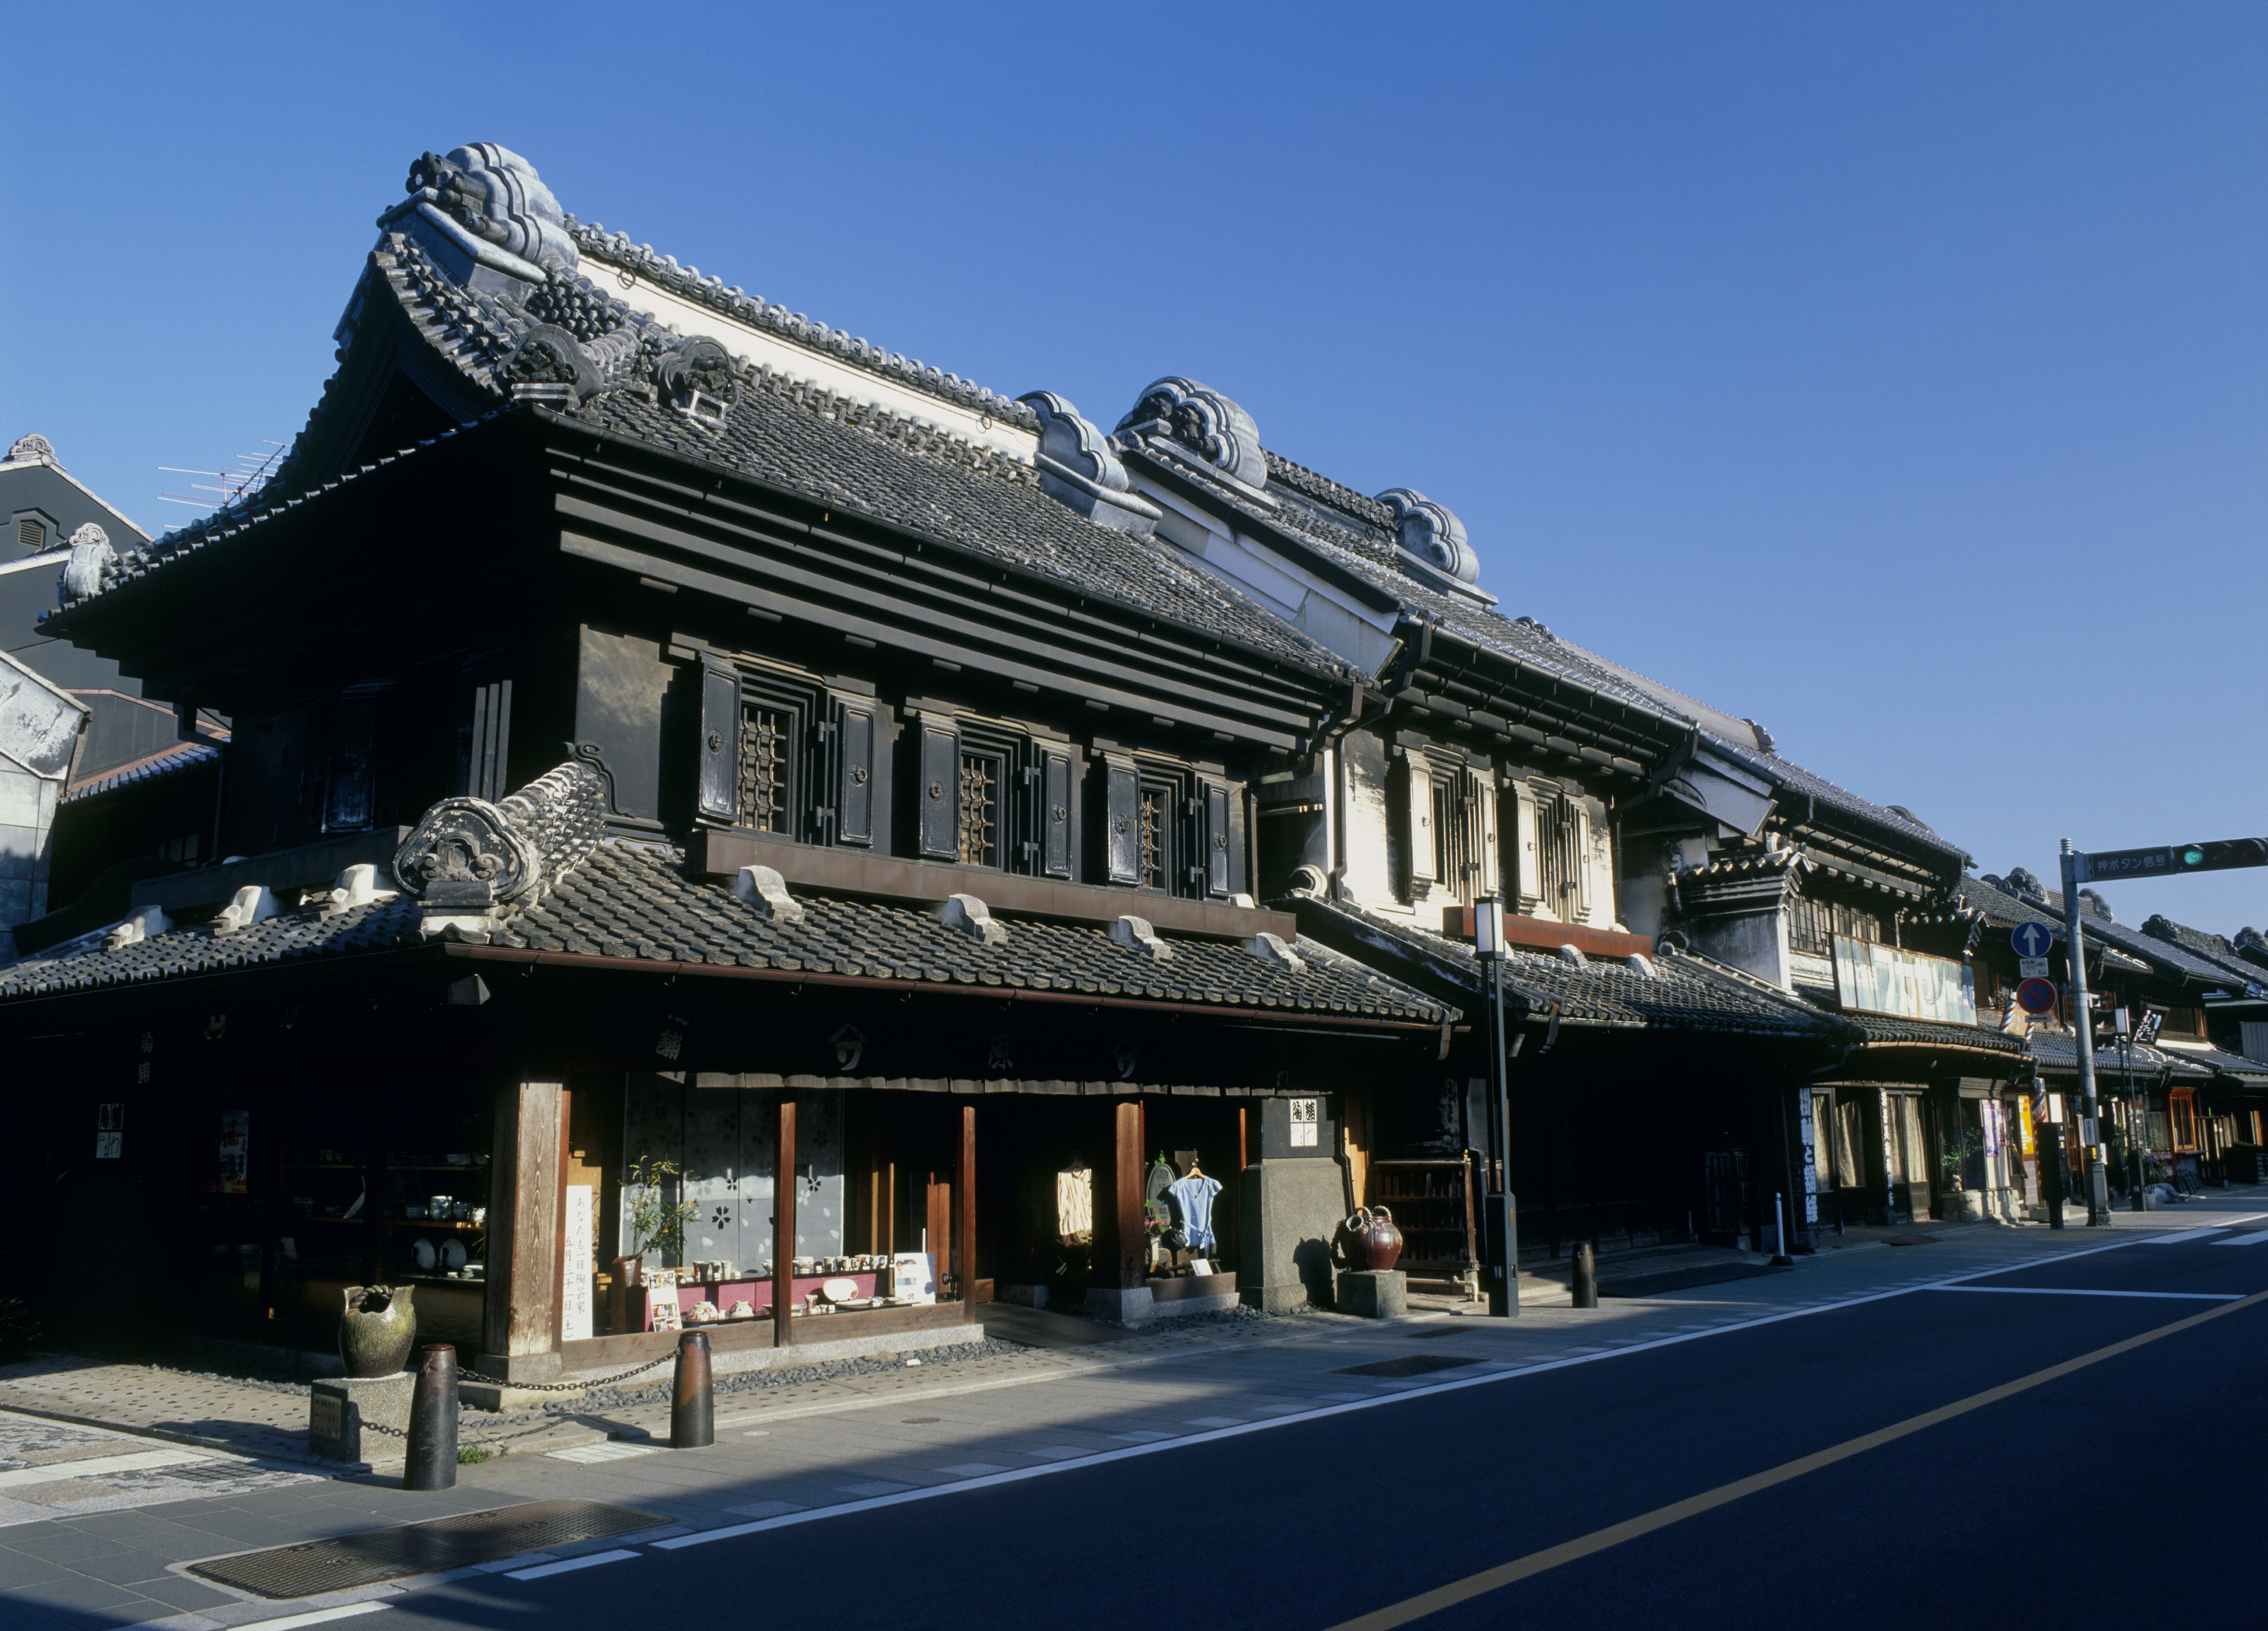 A street in Kawagoe line with traditional kurazukuri buildings